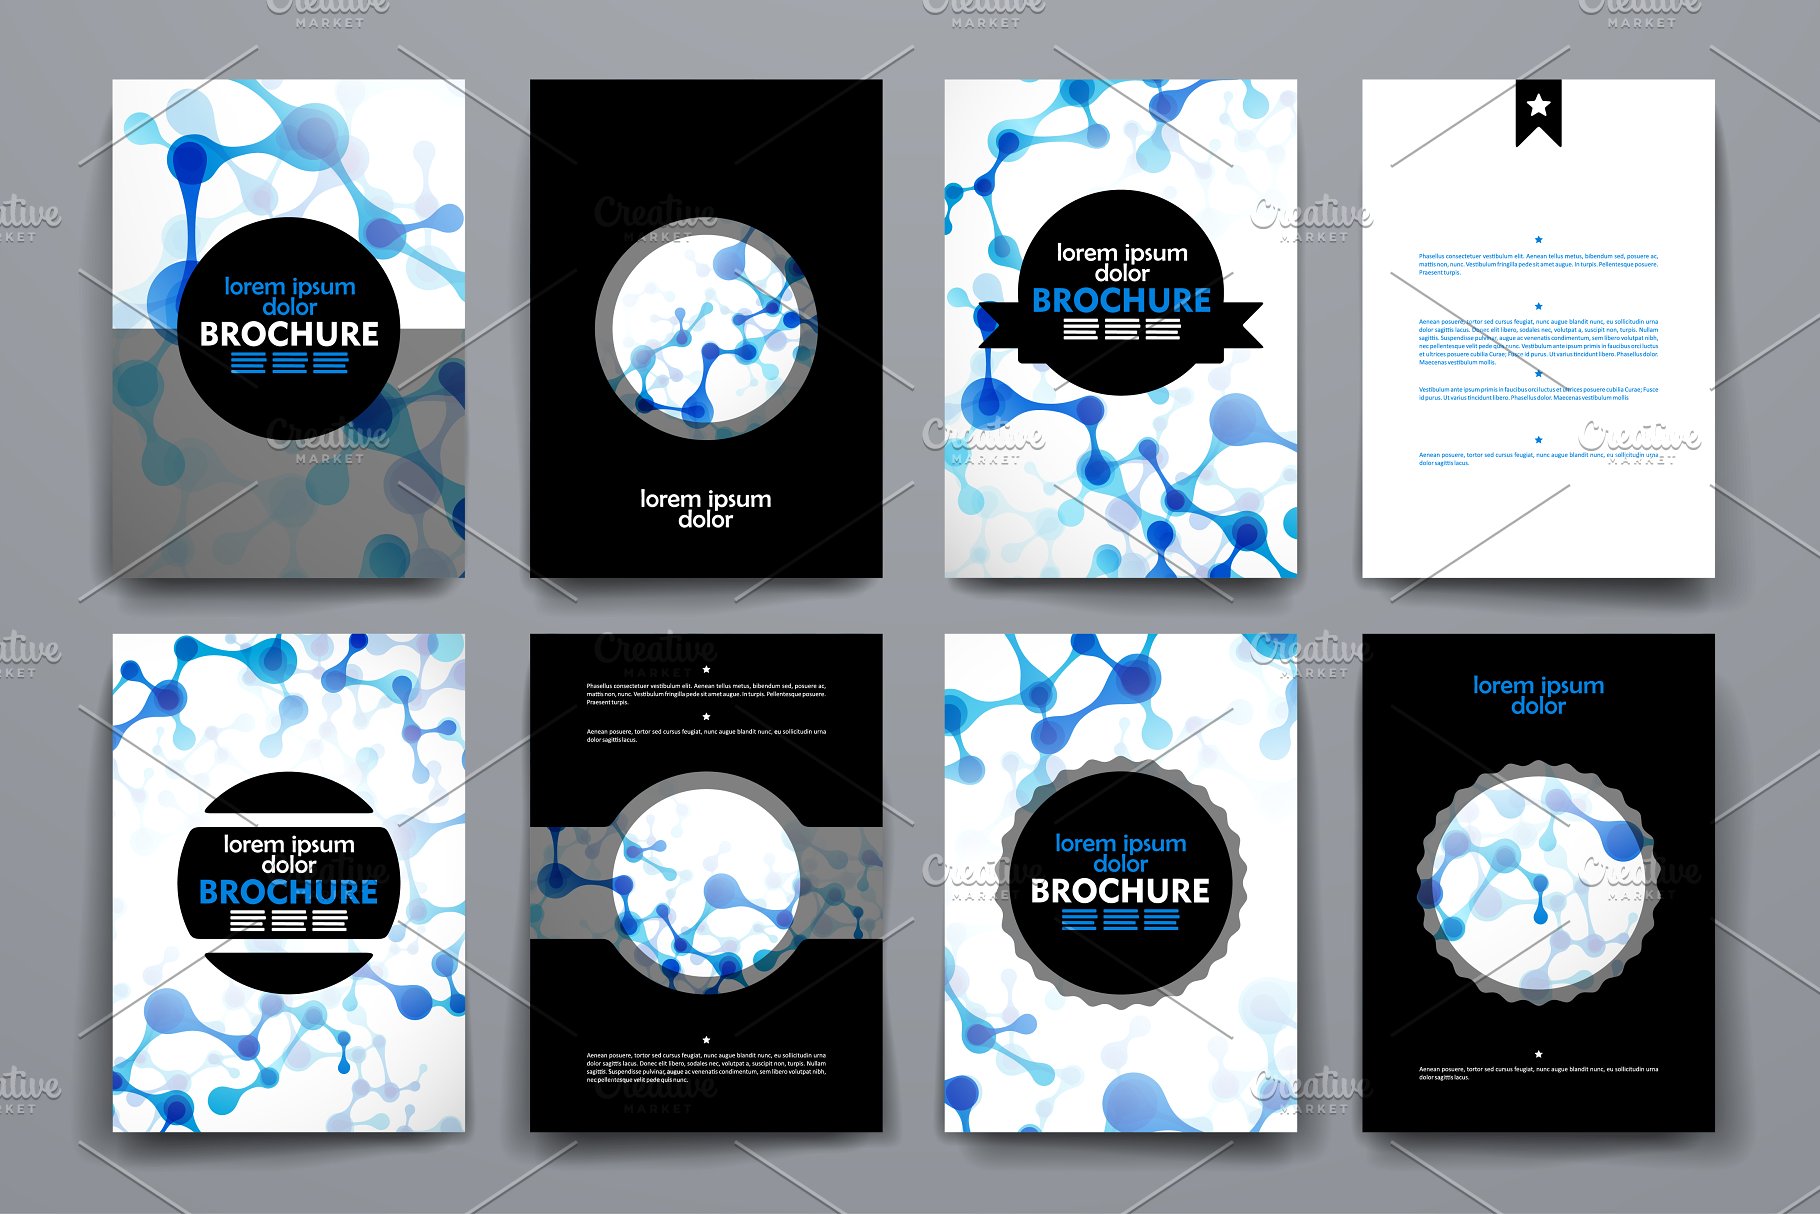 DNA抽象图形背景画册模板合集 Big Pack Brochures in DNA Style.插图(1)